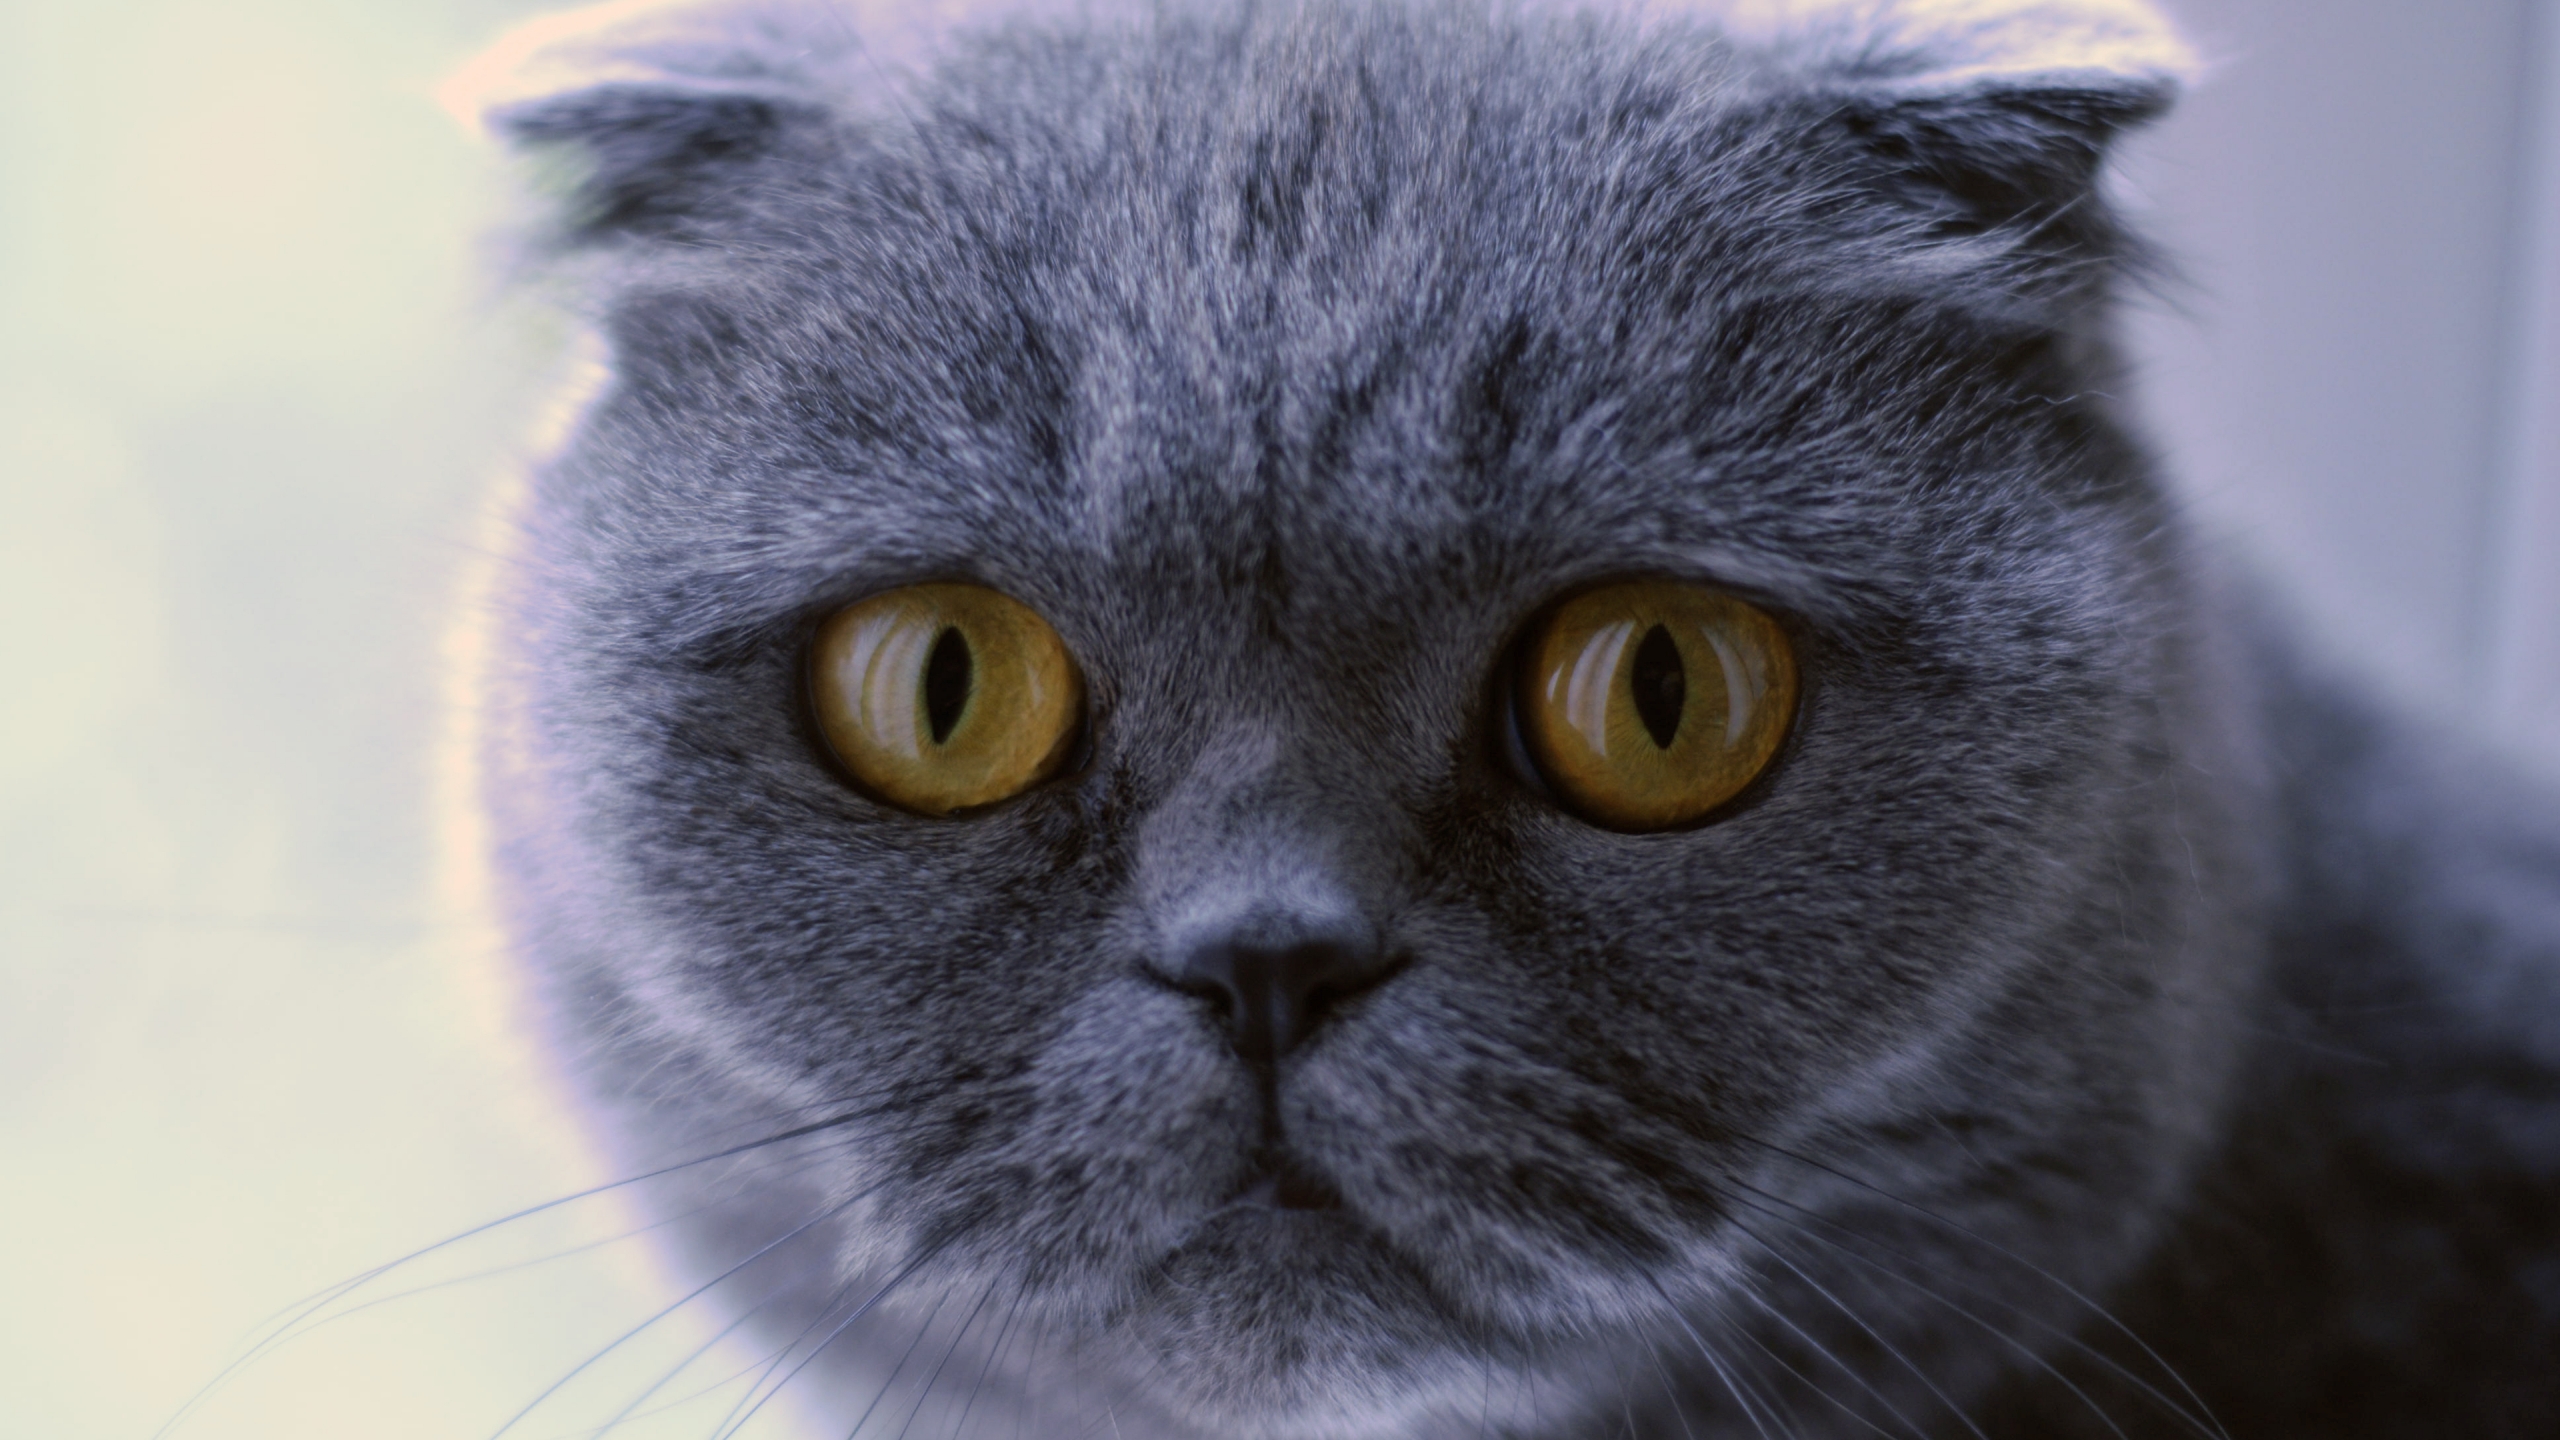 Blue Scottish Fold Cat for 2560x1440 HDTV resolution